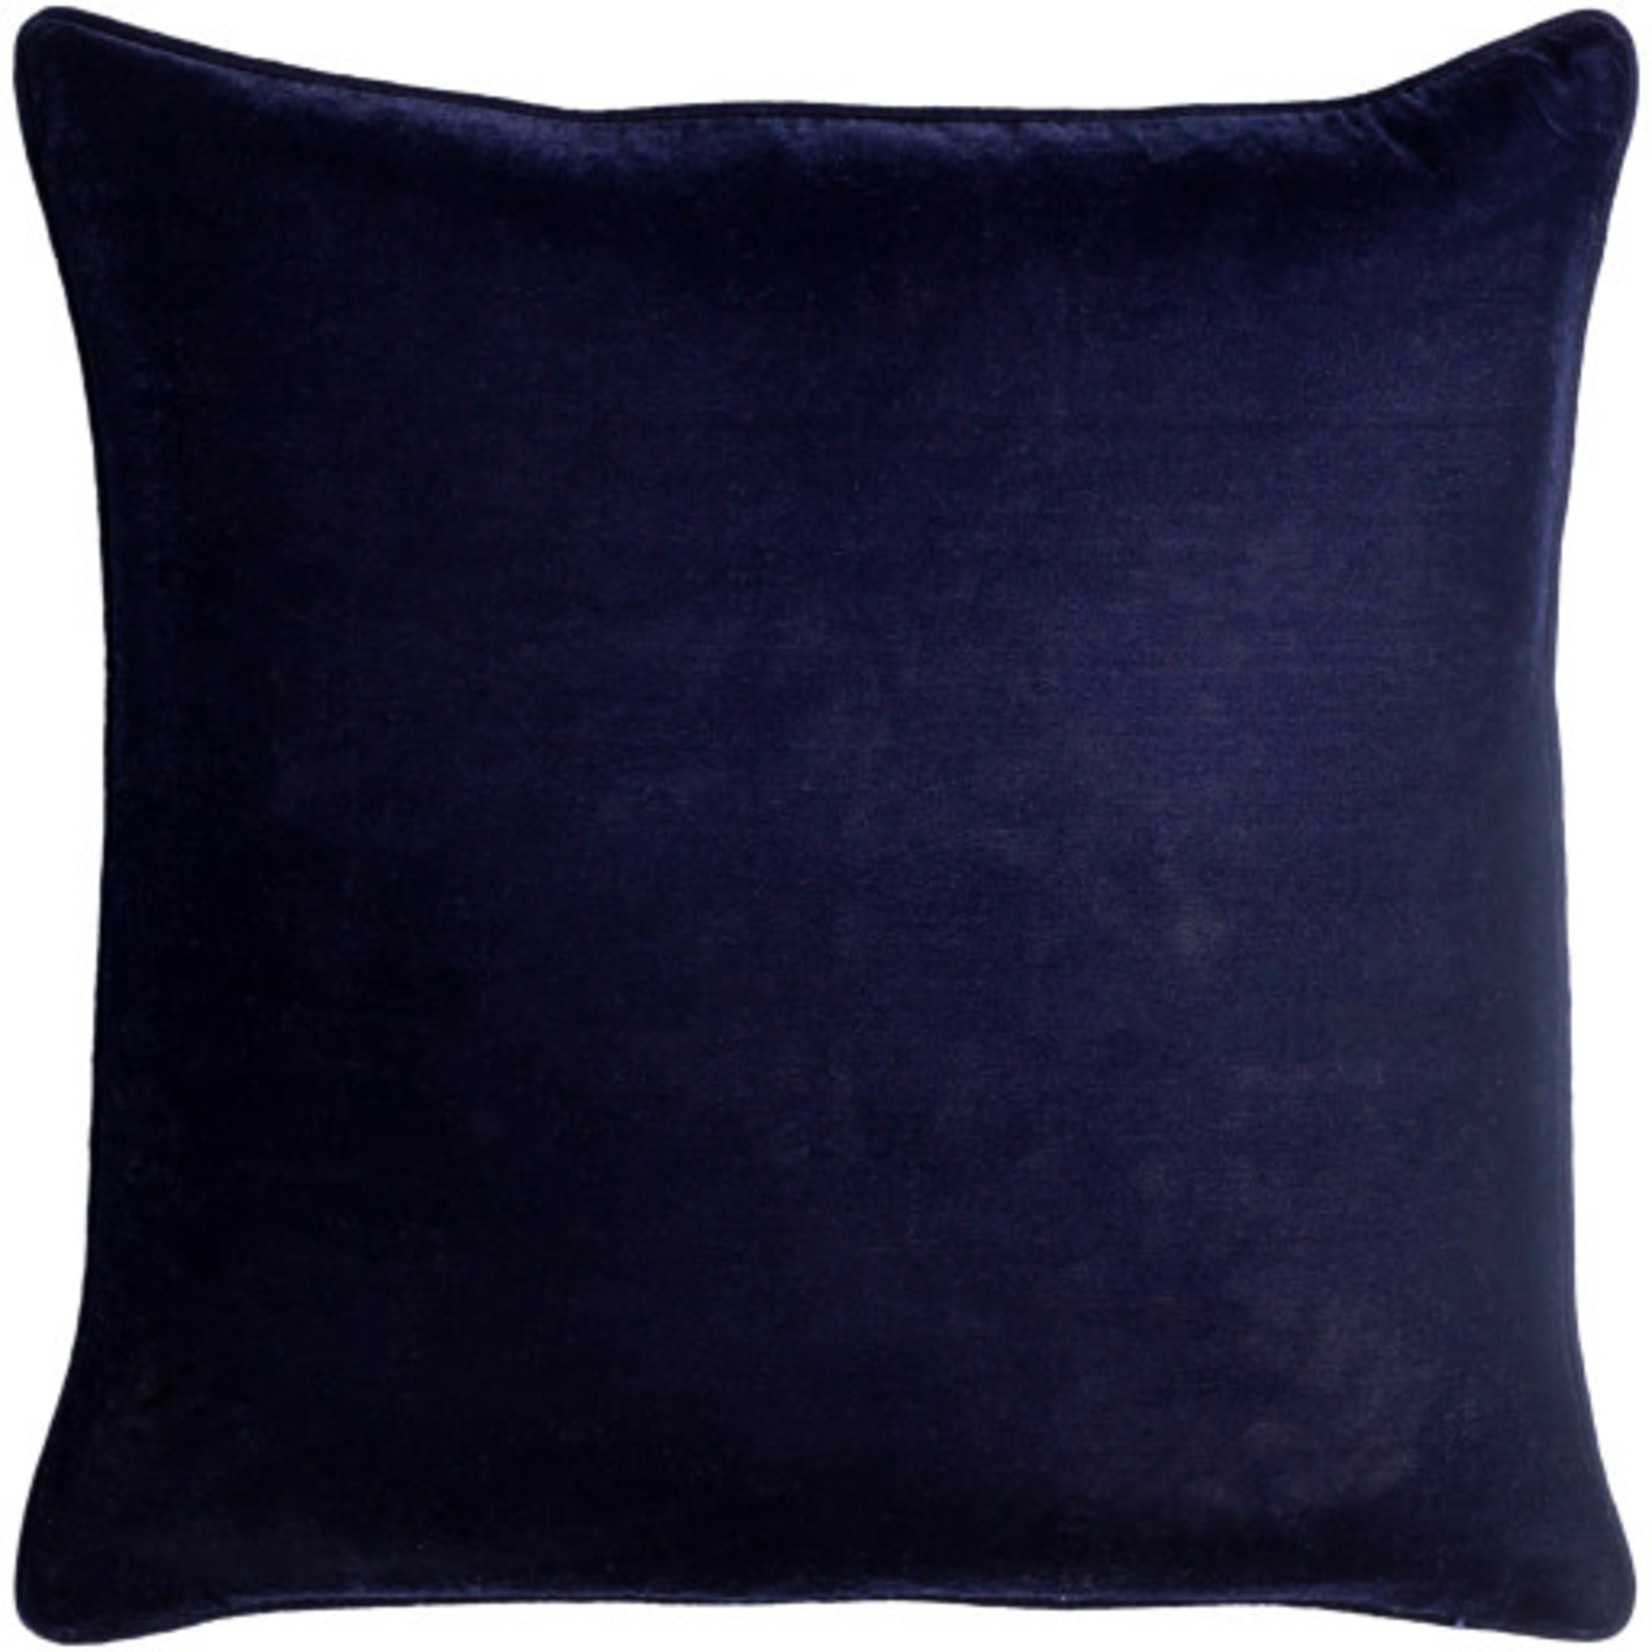 Surya VGM003 20x20 Pillow